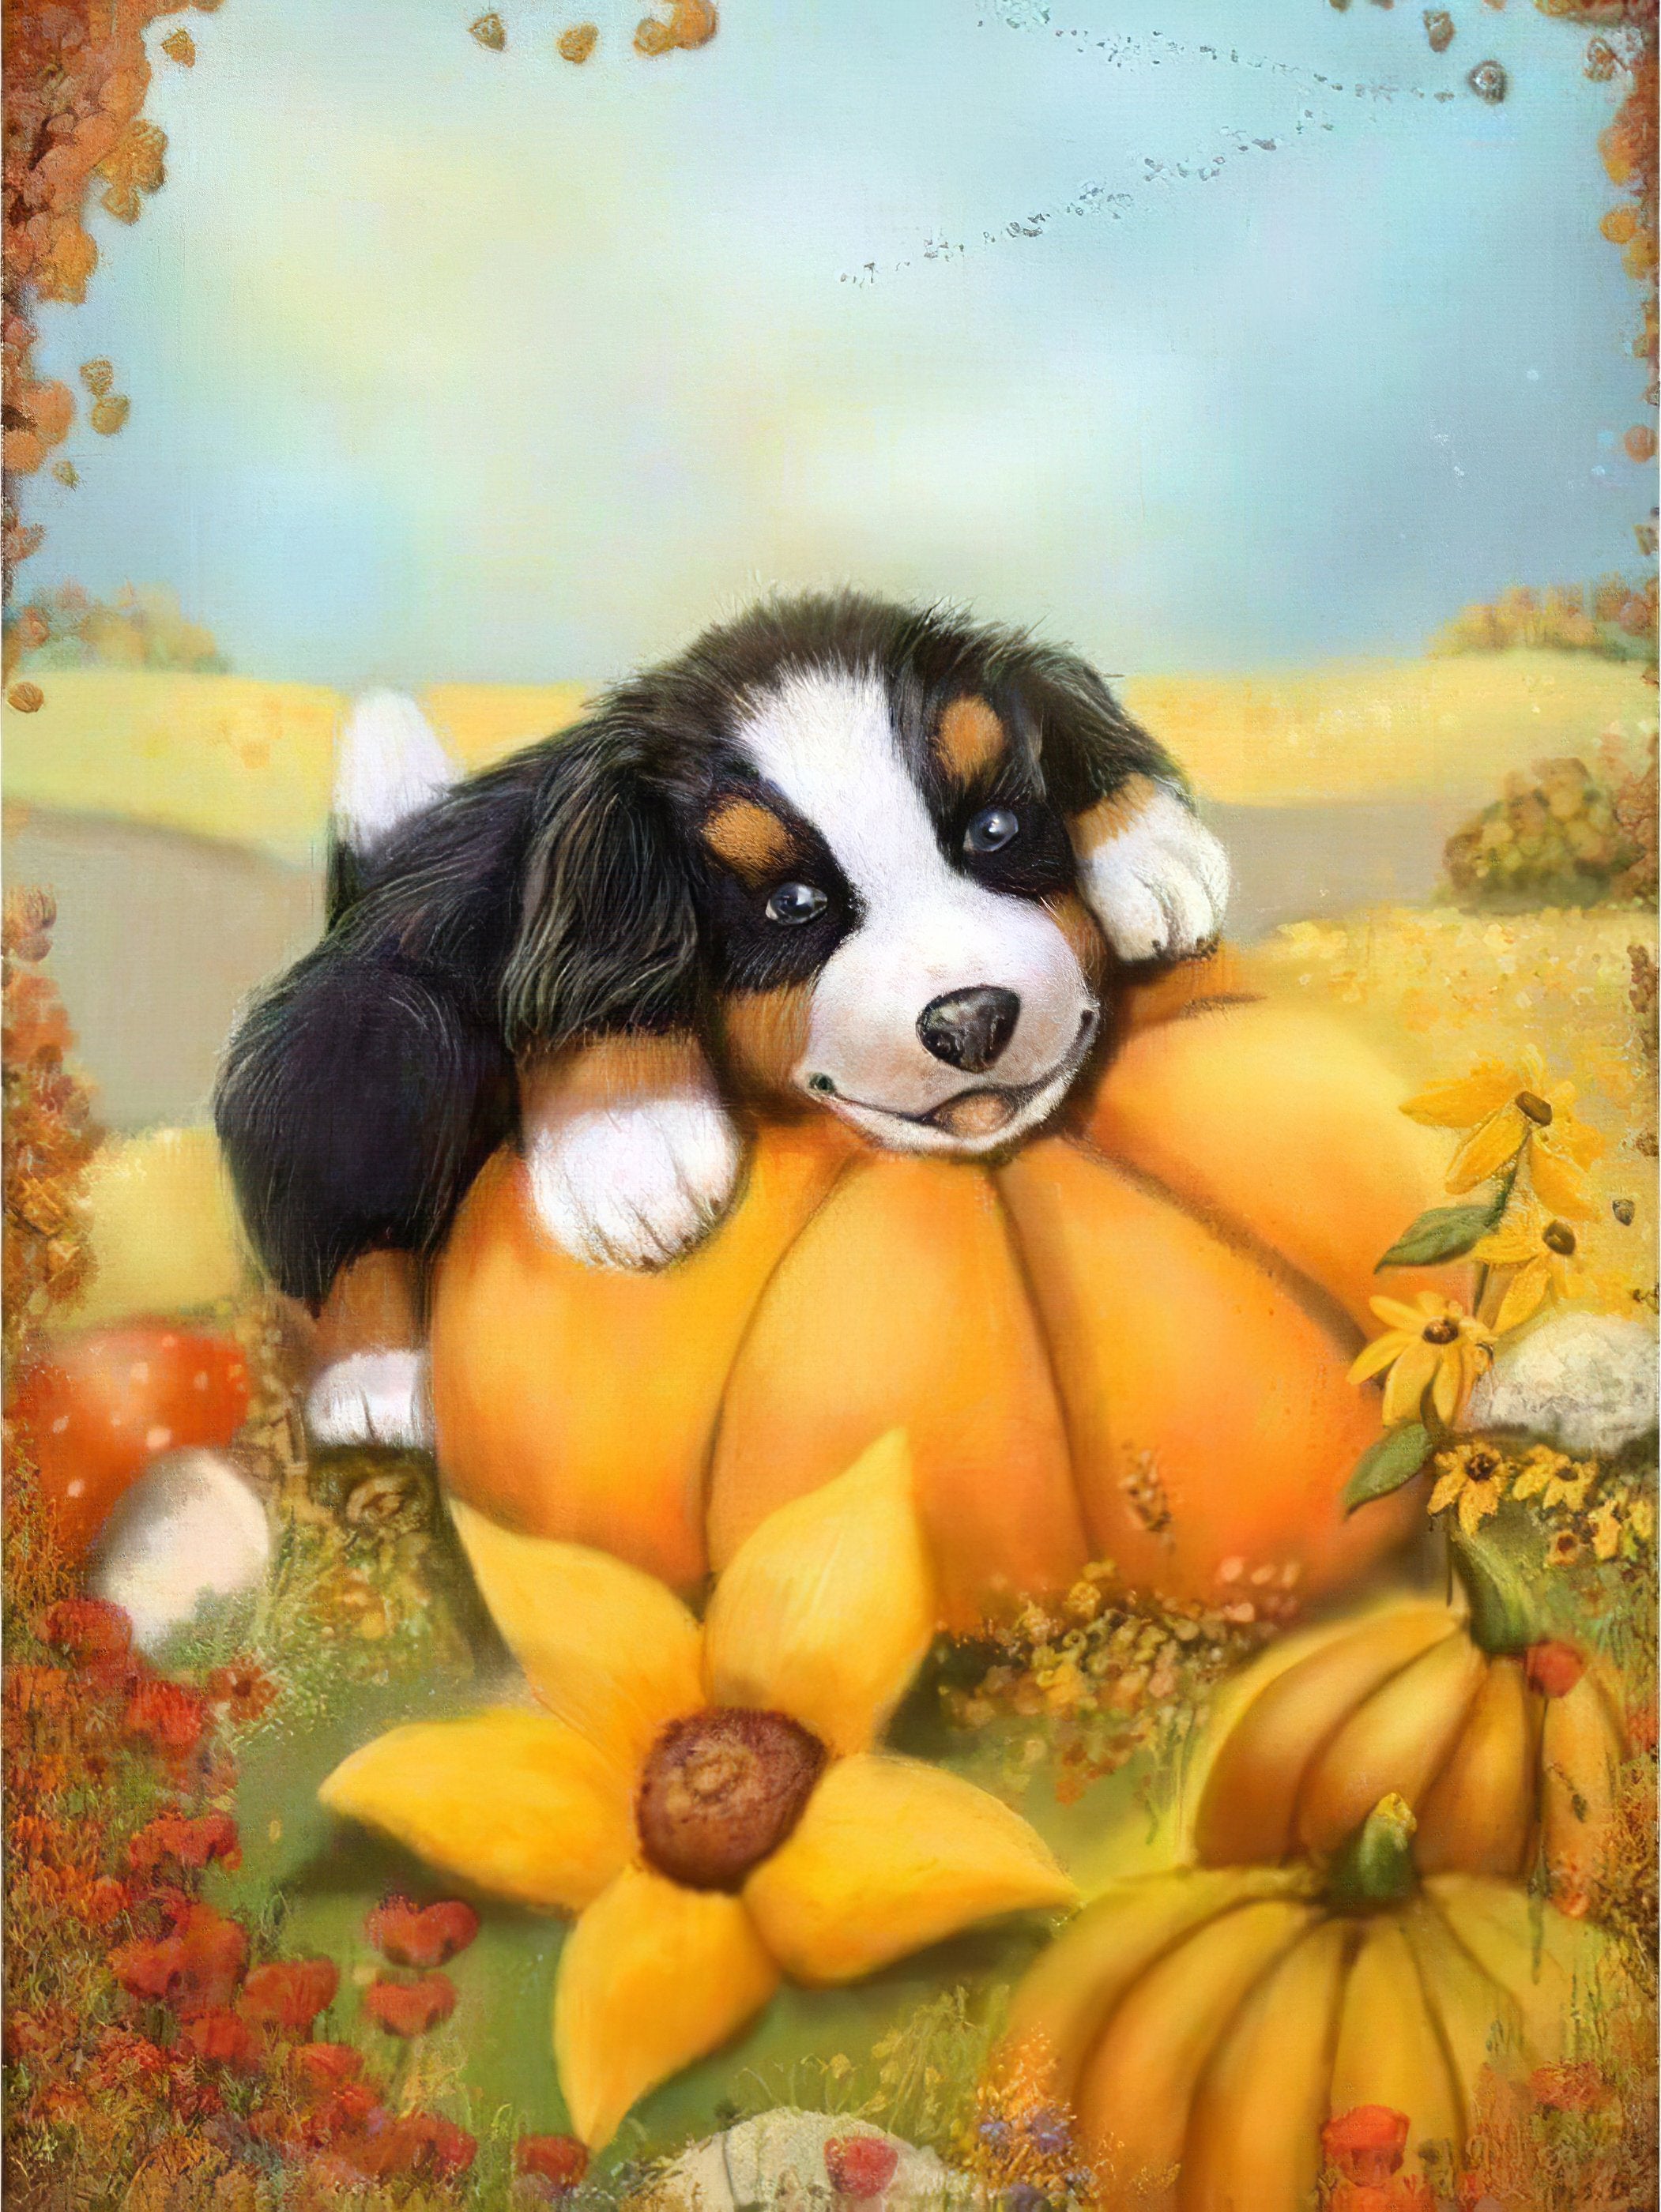 Experience the cute encounter between a puppy and a pumpkin in this heartwarming scene.Puppy And Pumpkin - Diamondartlove